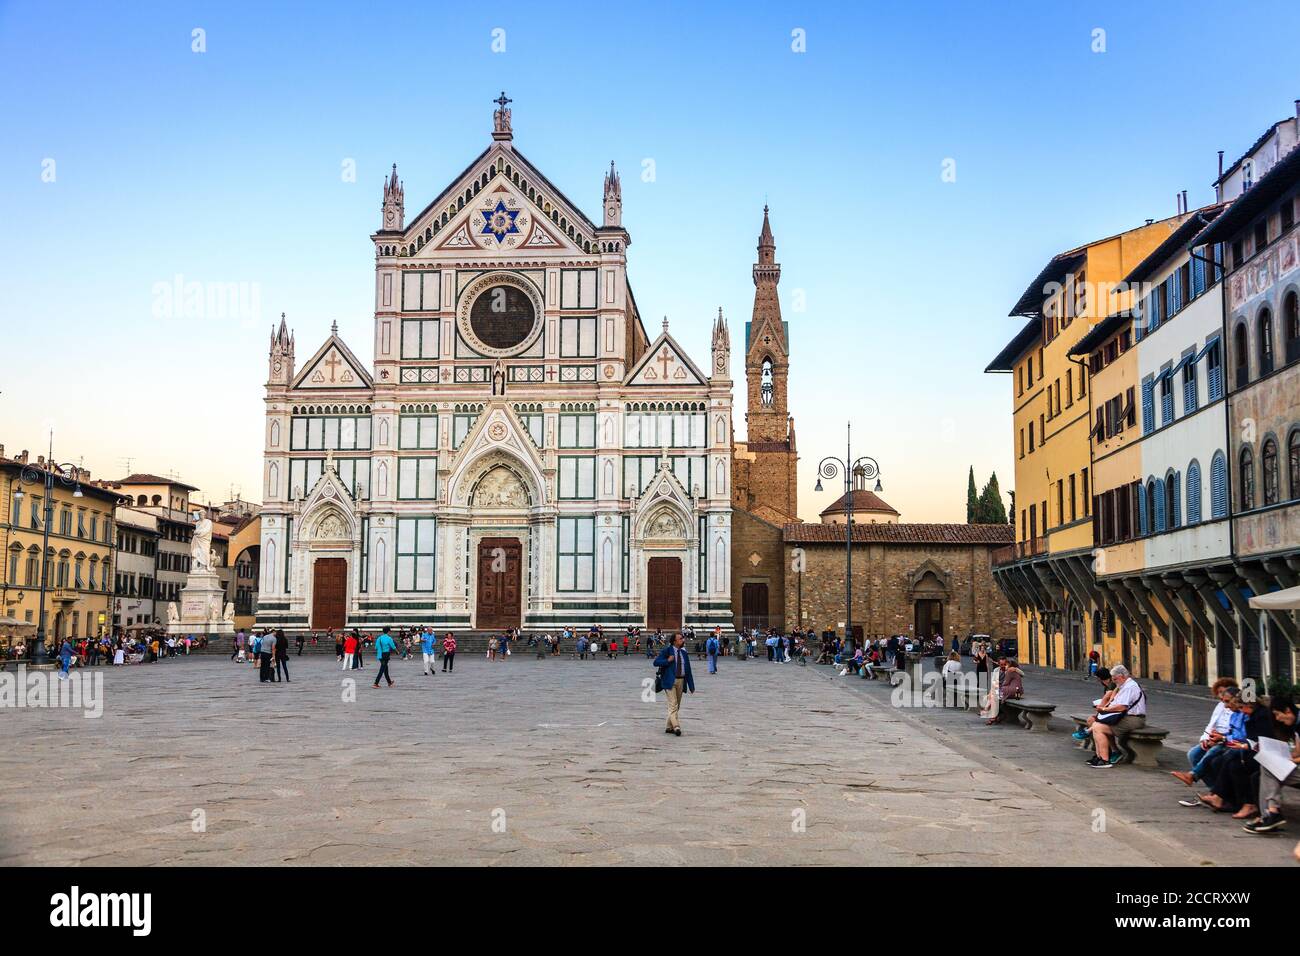 Florenz, Italien, 20. September 2015: Die Basilica di Santa Croce und die Piazza di Santa Croce in Florenz, Italien Stockfoto